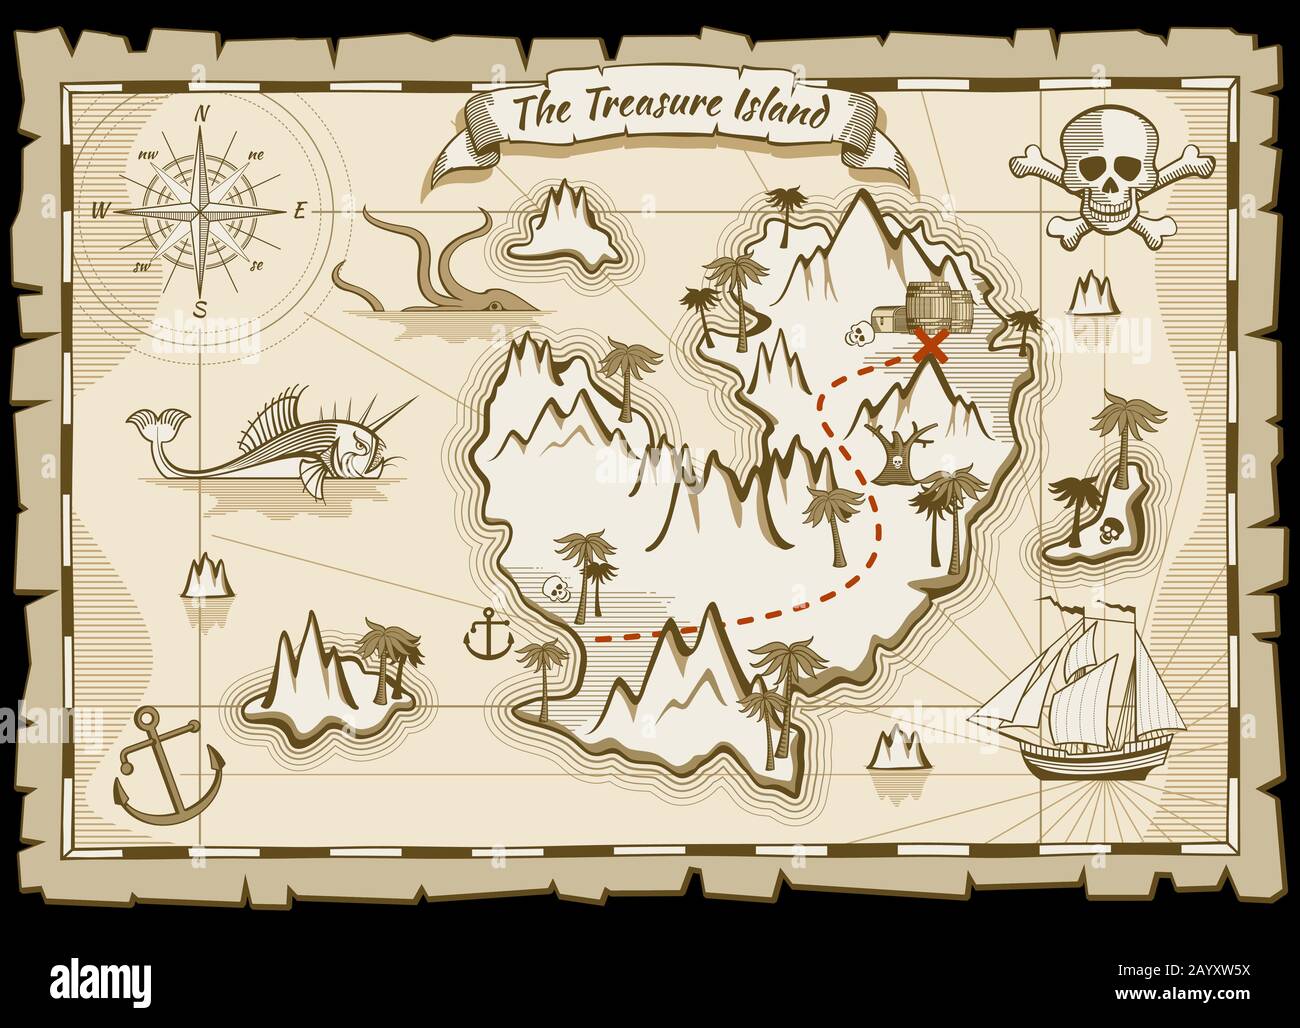 Treasure pirate hand drawn vector map. Pirate map with ship and navigation to treasure. Island way treasure map illustration Stock Vector